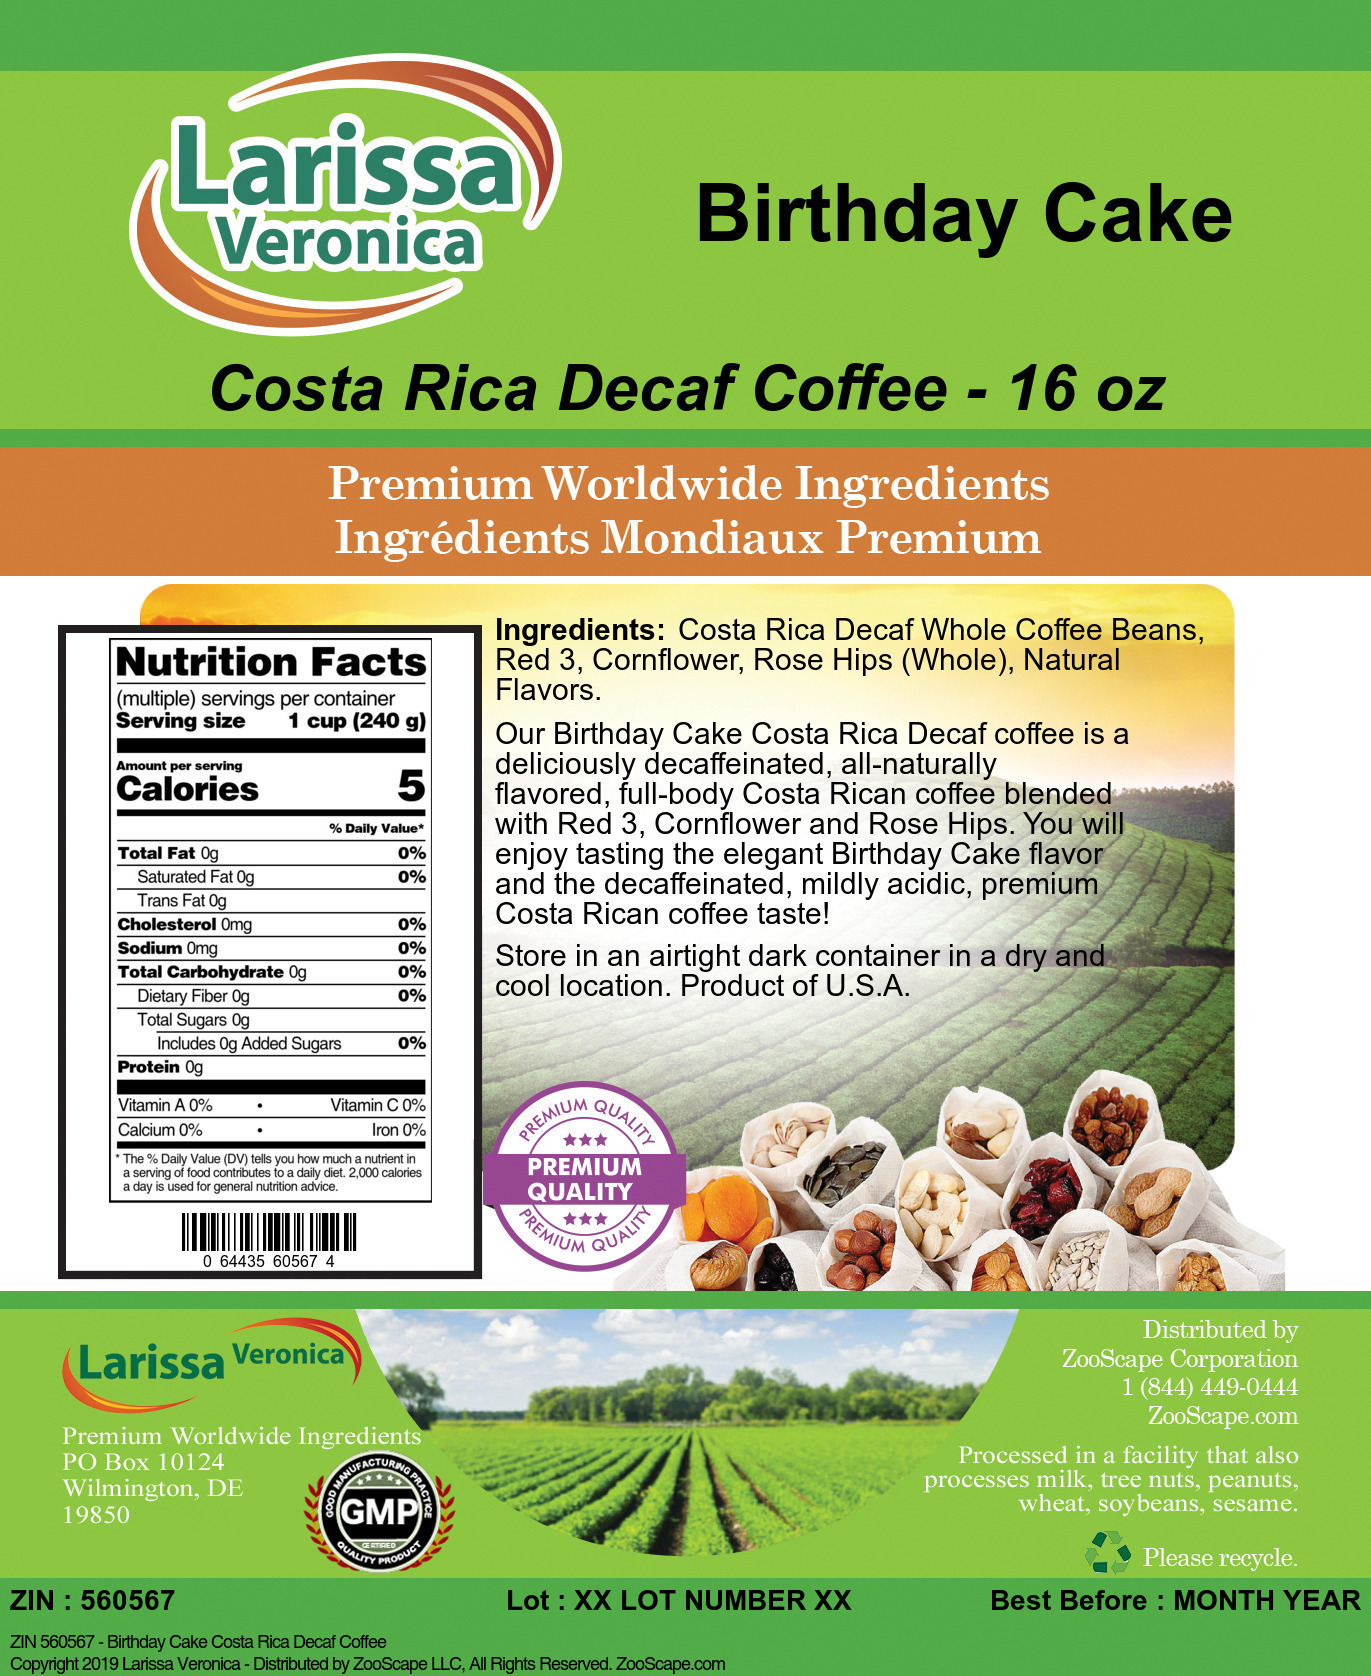 Birthday Cake Costa Rica Decaf Coffee - Label